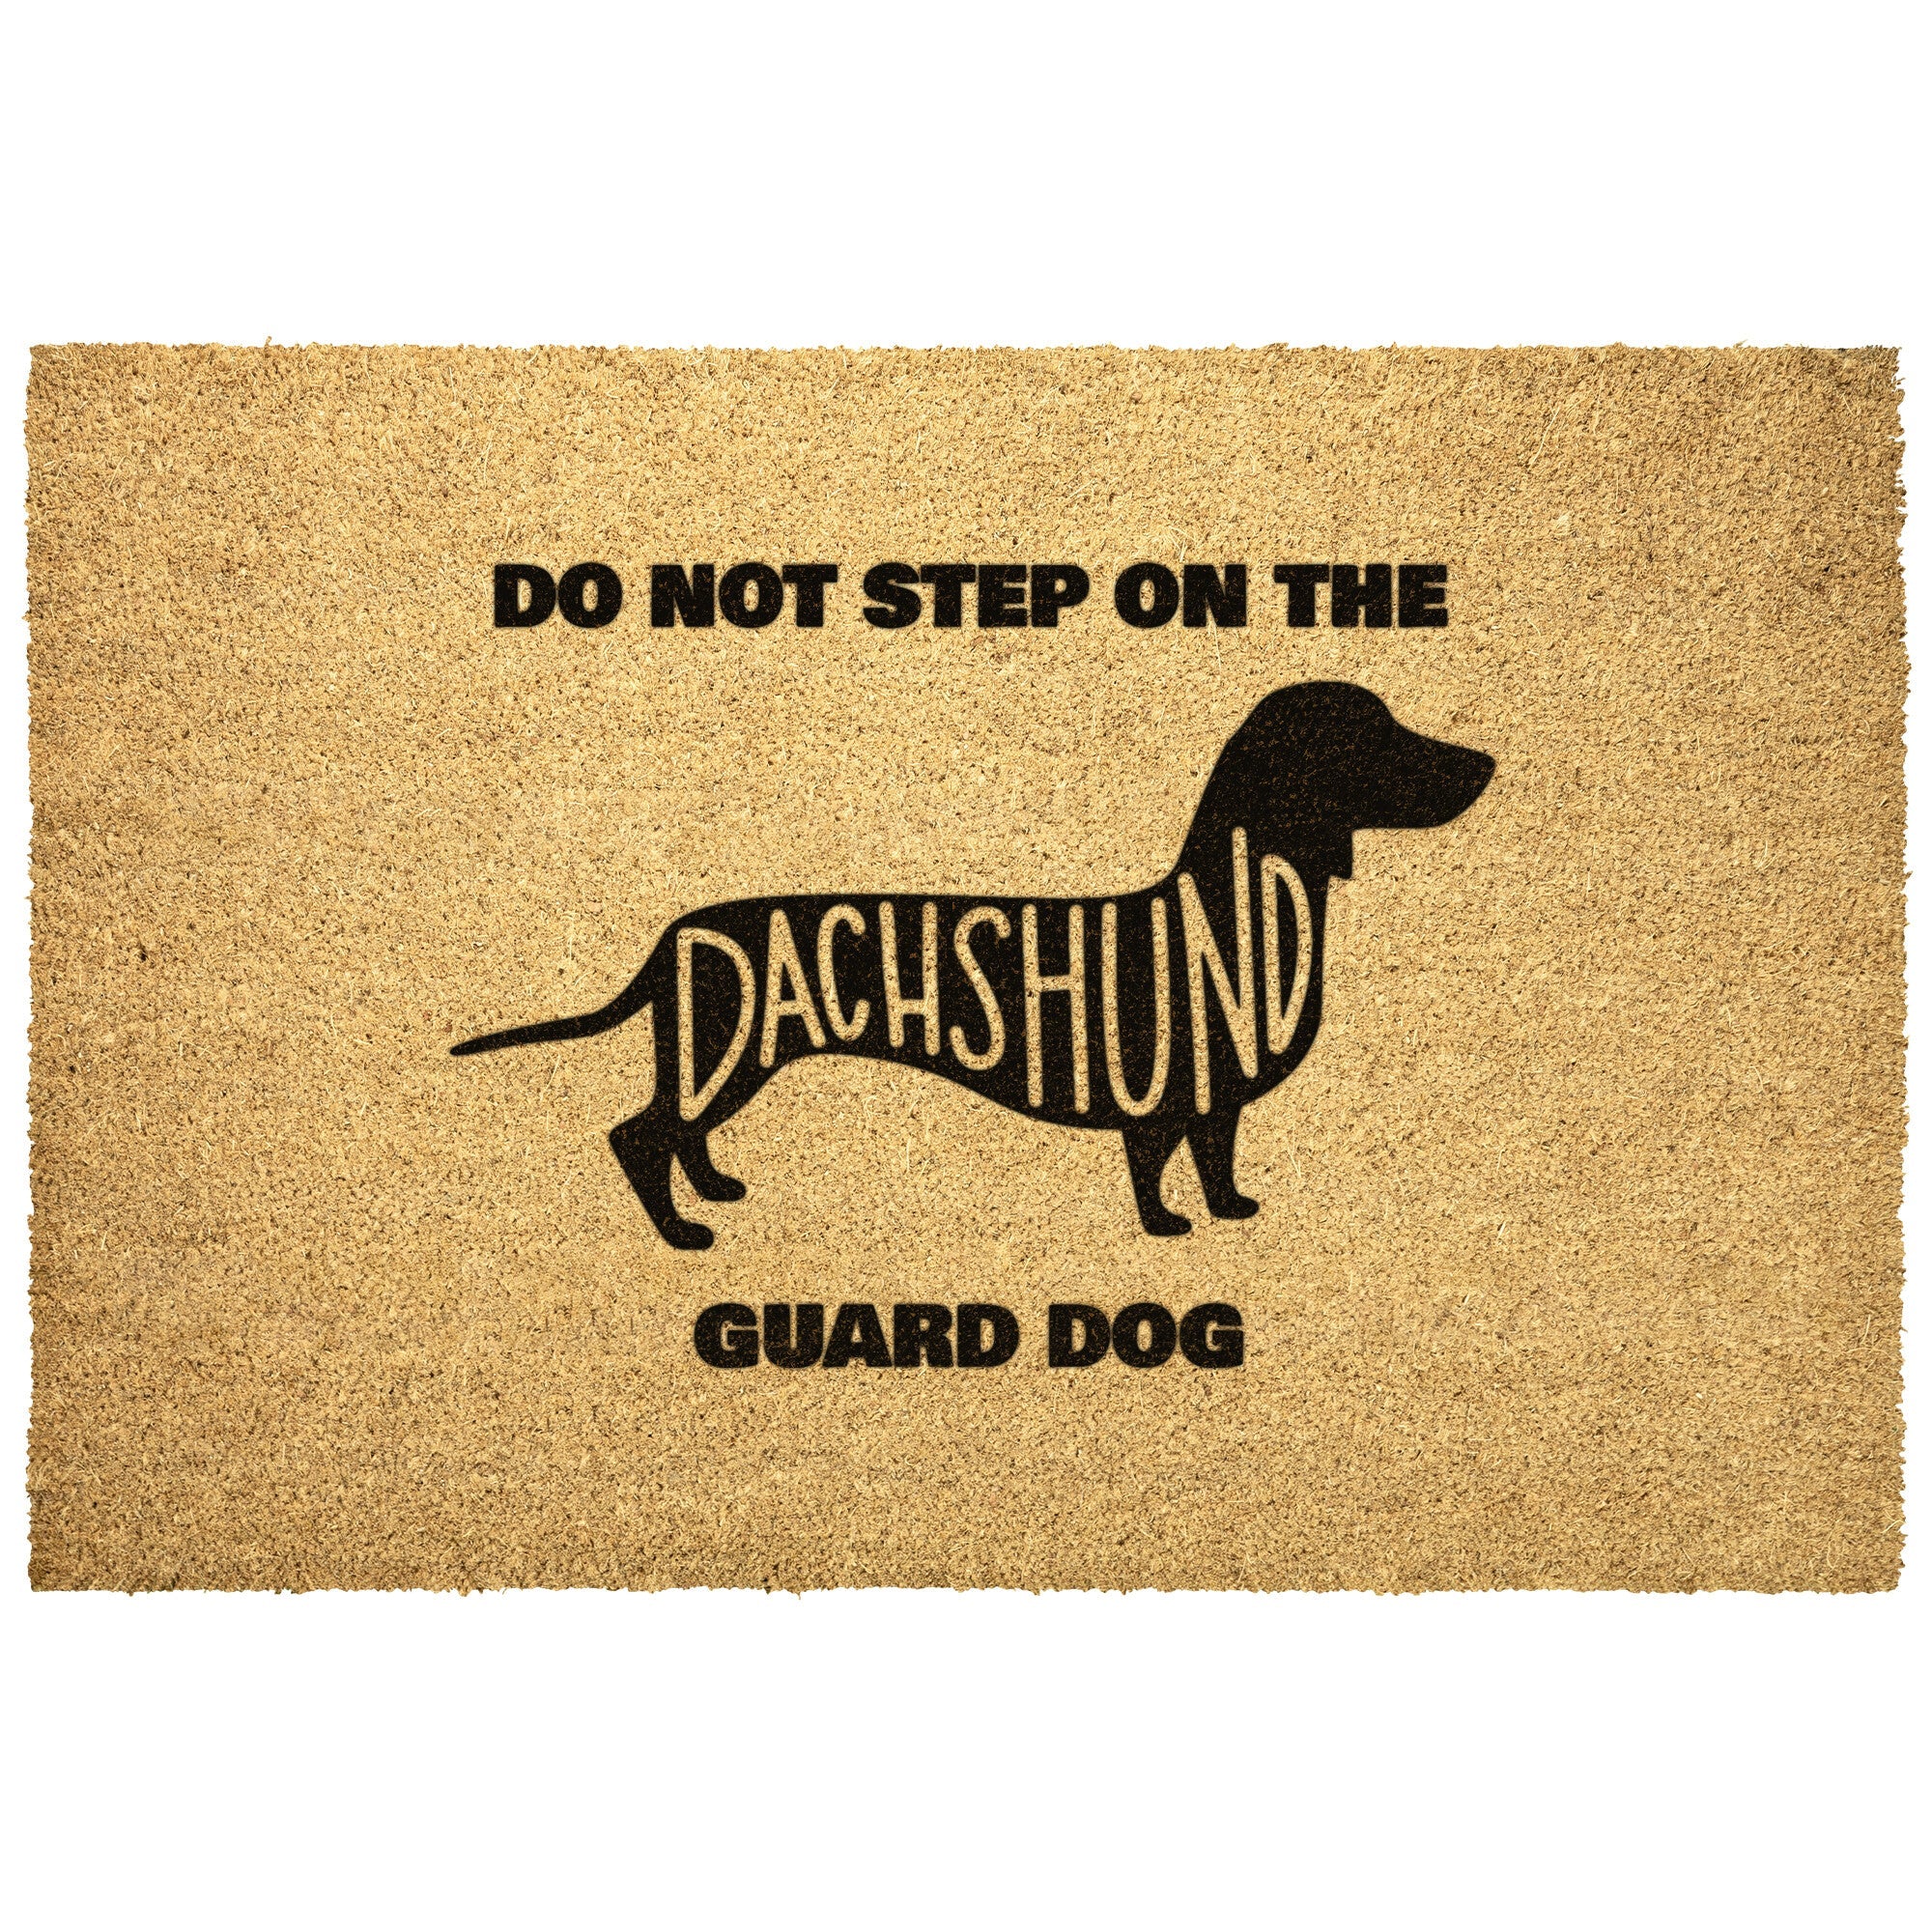 Do not step on the Dachshund guard dog Outdoor Door Mat